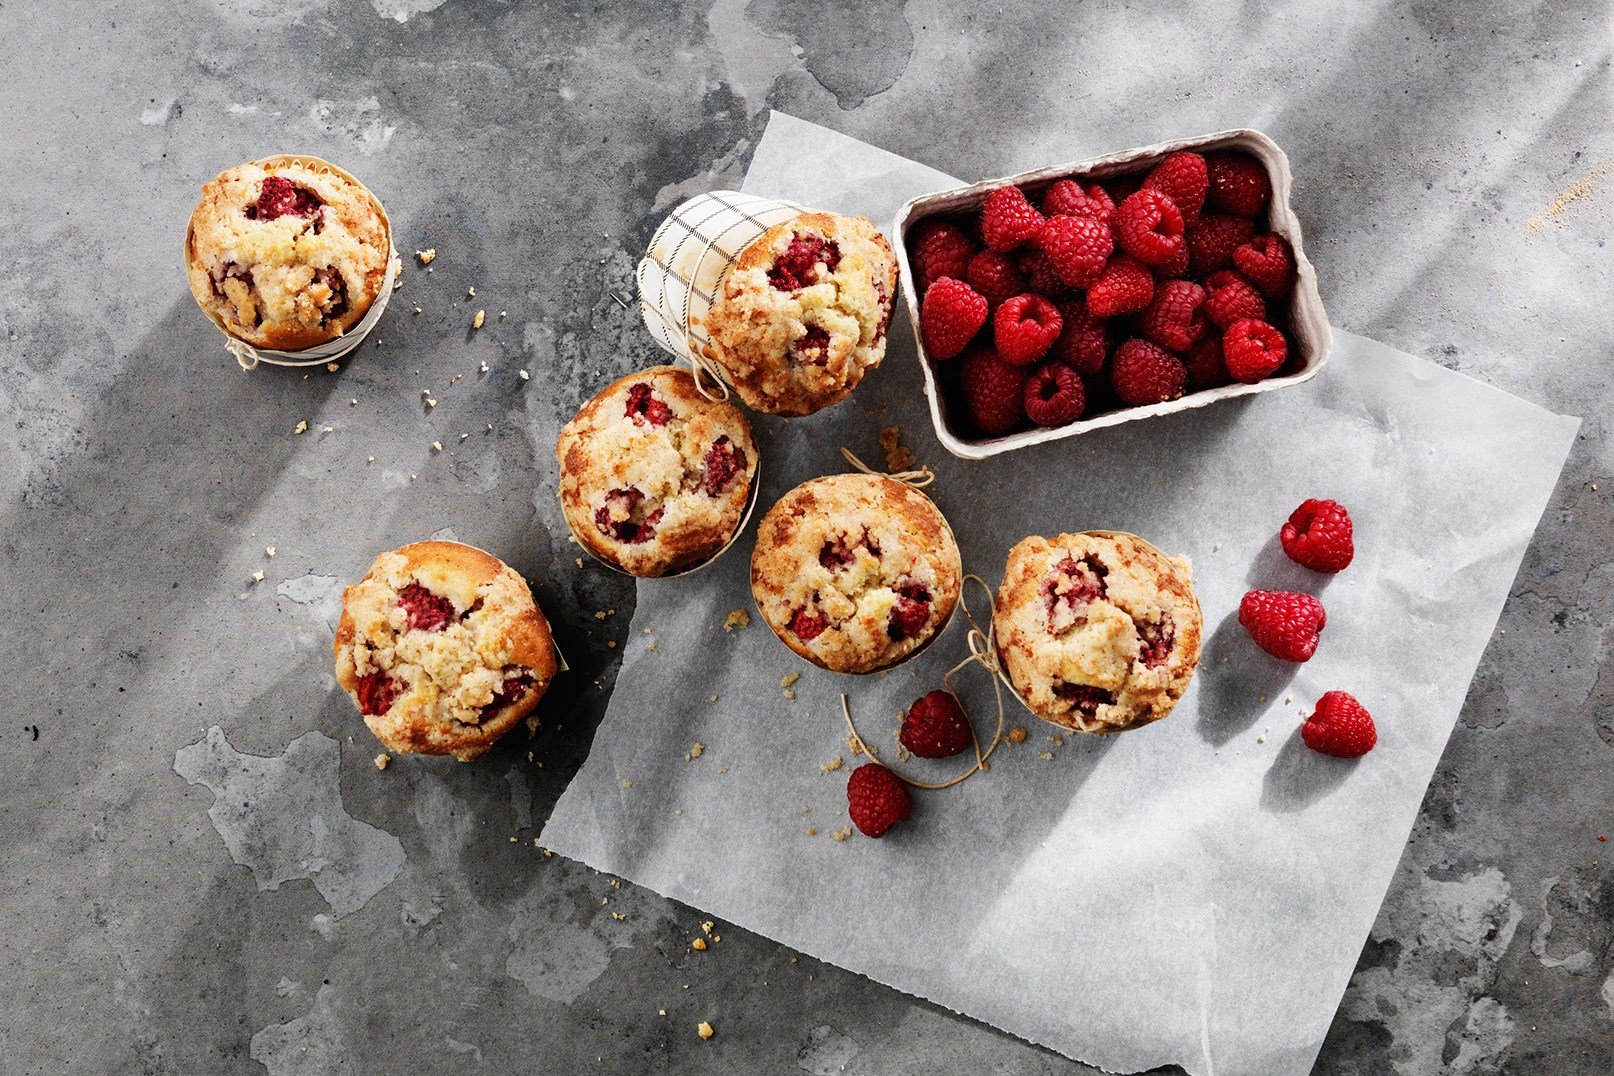 Cardamom Muffins with Raspberries, Custard & Crumble Topping